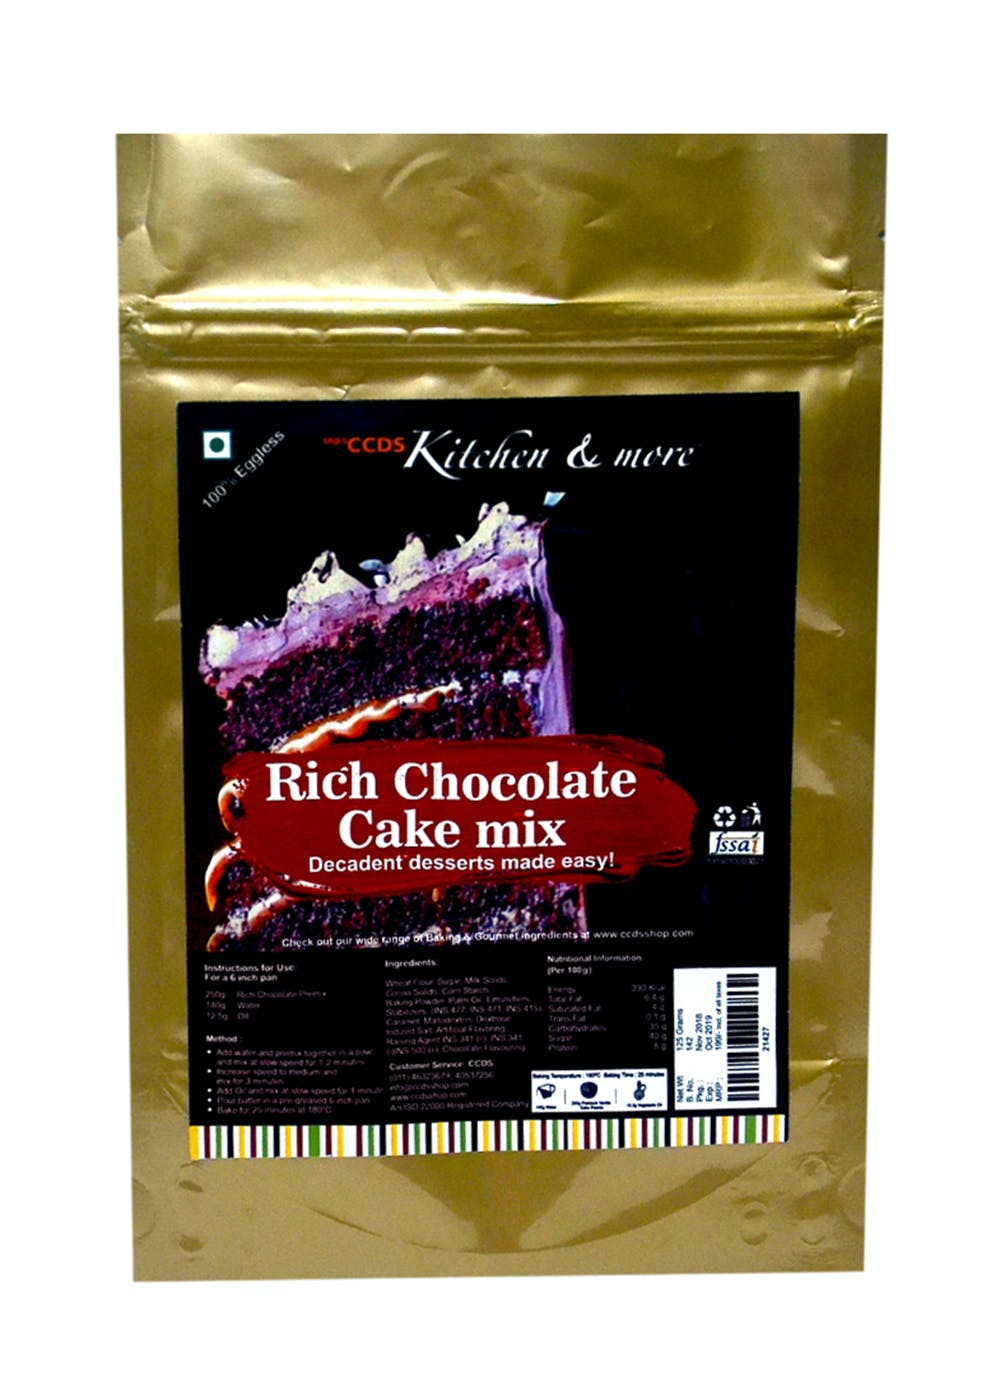 Homemade cake premix using GMS powder, How to make Chocolate and Vanilla  premix at home - YouTube